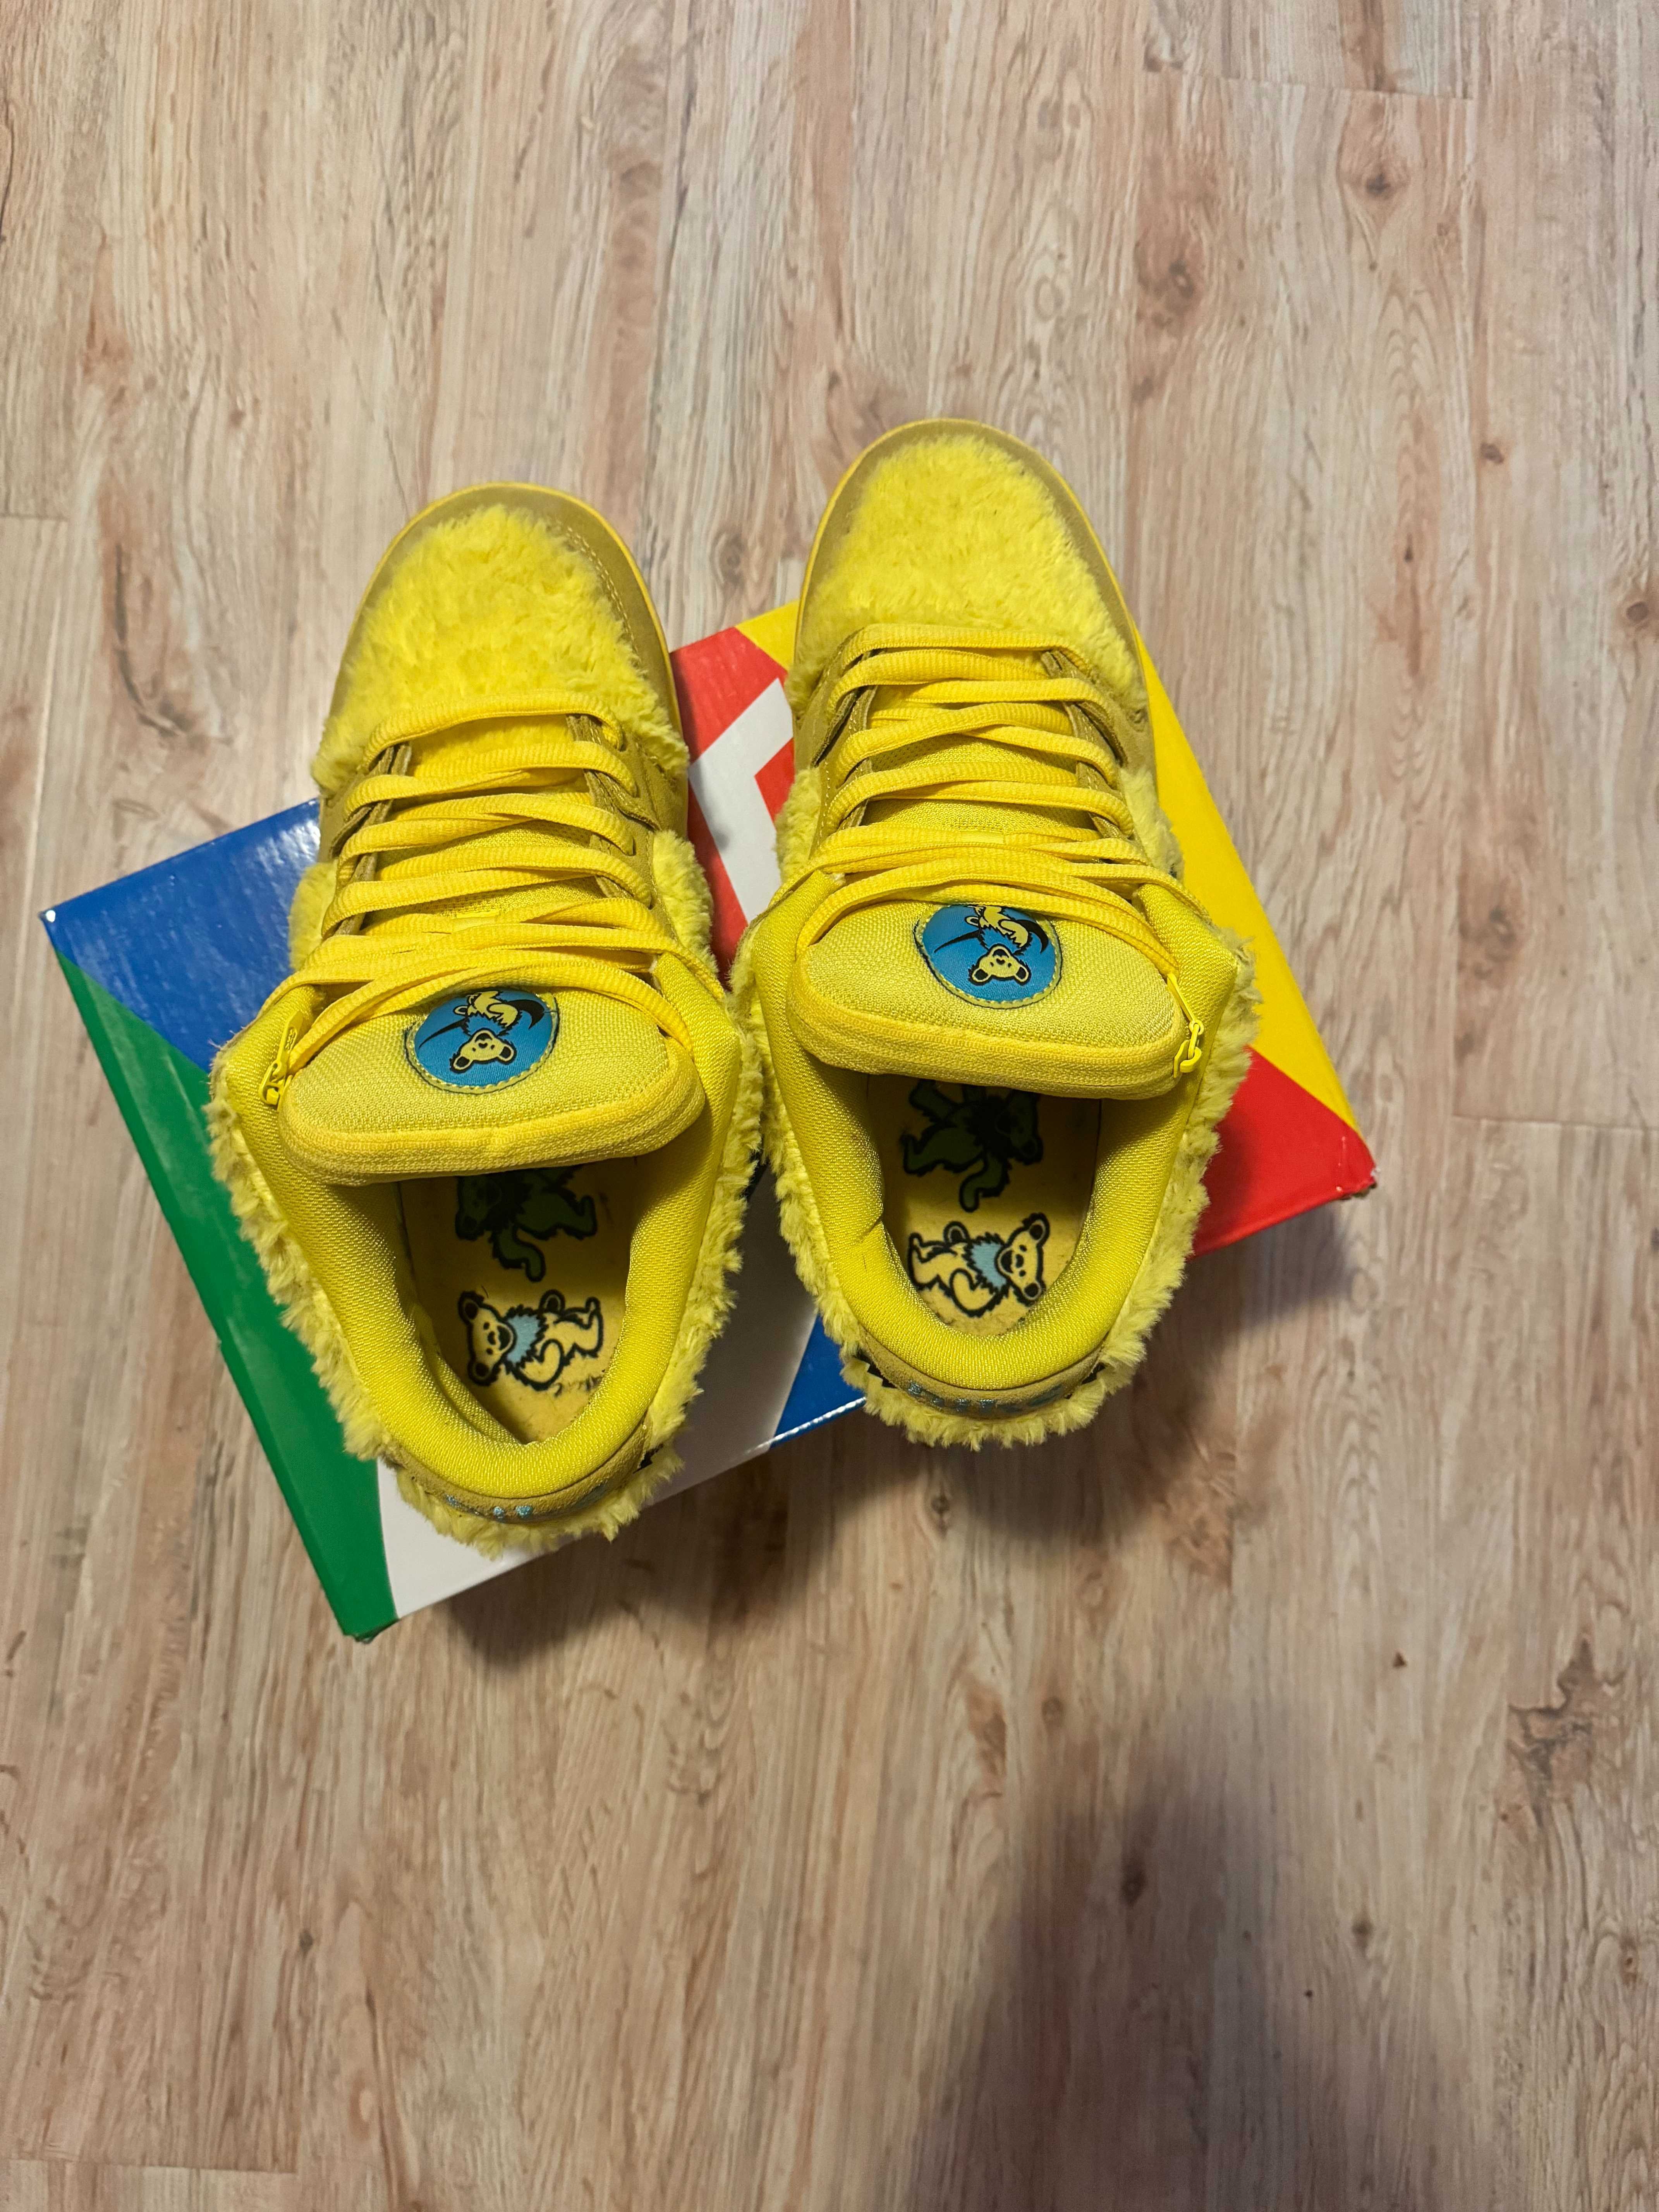 ADIDASI SB Dunk Low "Yellow Bear" sneakers